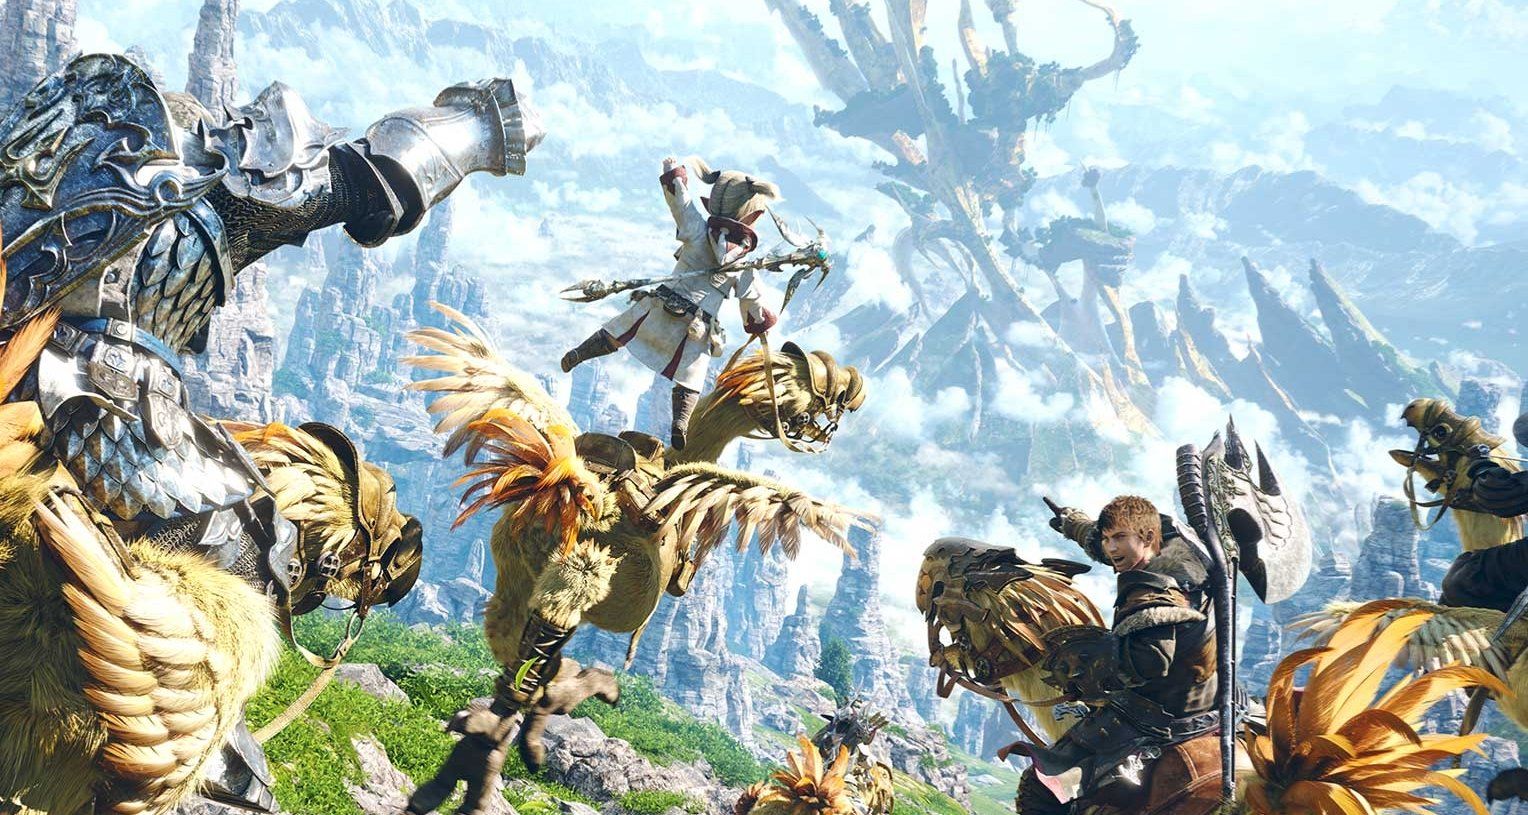 Final Fantasy XIV Celebrates Over 18 Million Registered Player Milestone